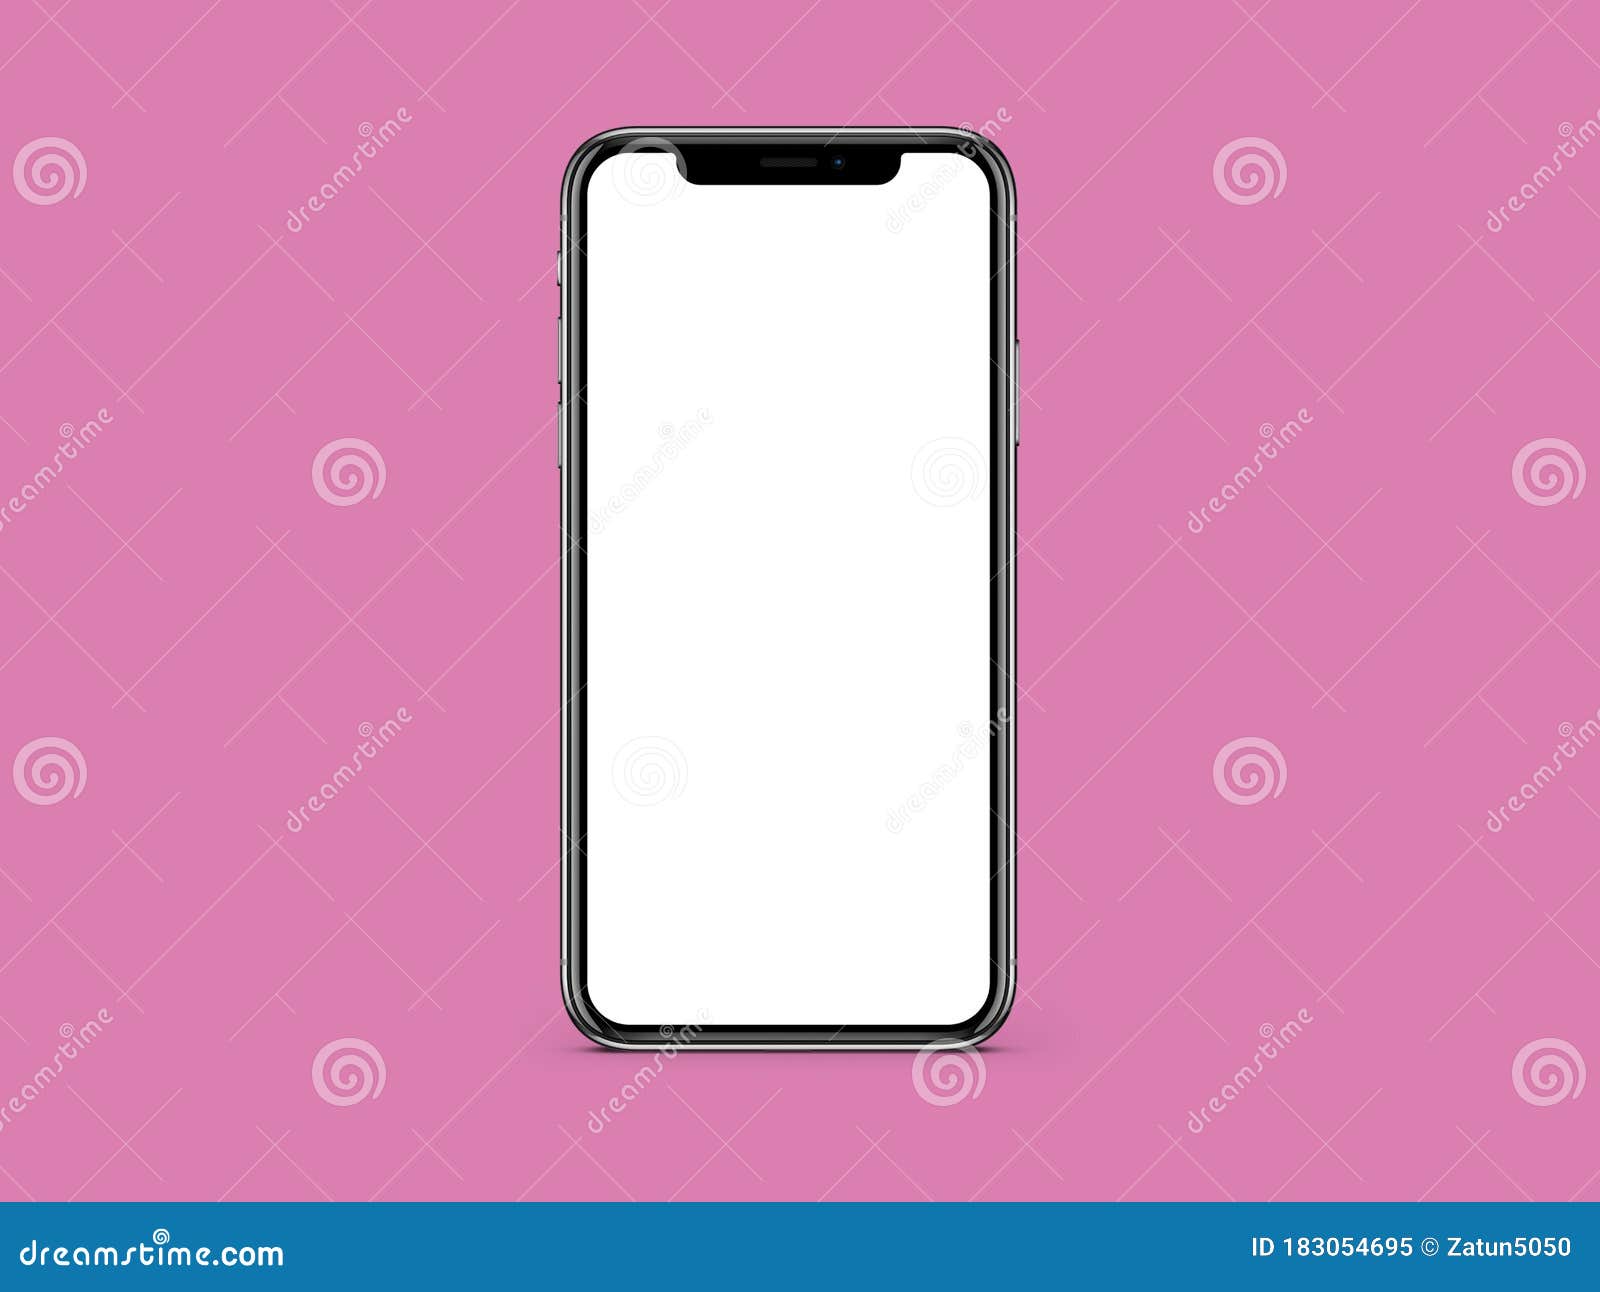 IPhone X Blank White Screen Mockup on Pink Color Background Mockup Stock  Illustration - Illustration of plain, design: 183054695